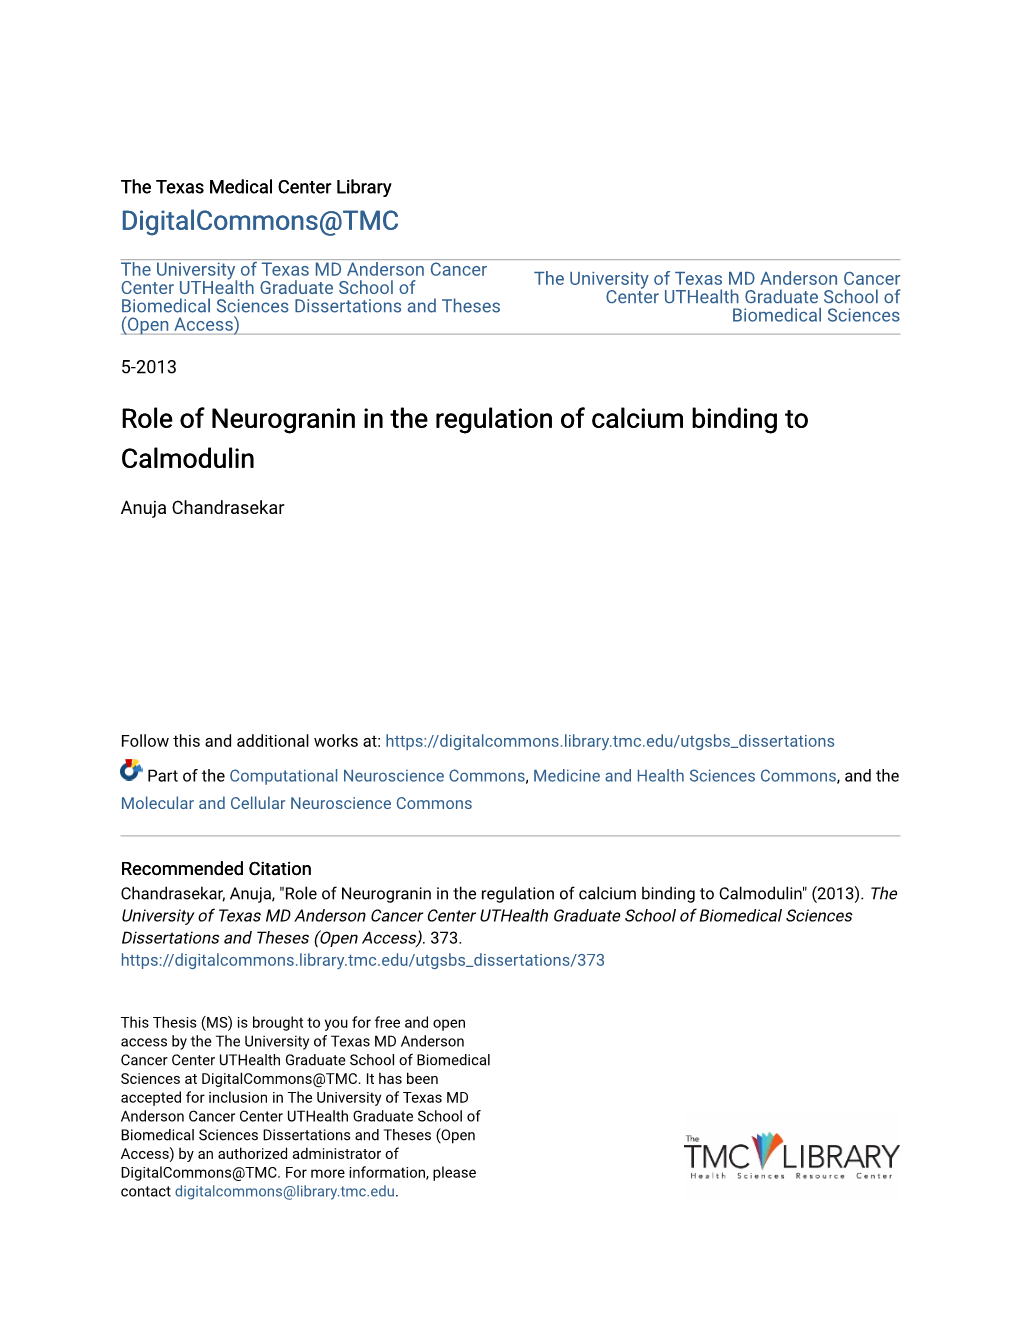 Role of Neurogranin in the Regulation of Calcium Binding to Calmodulin